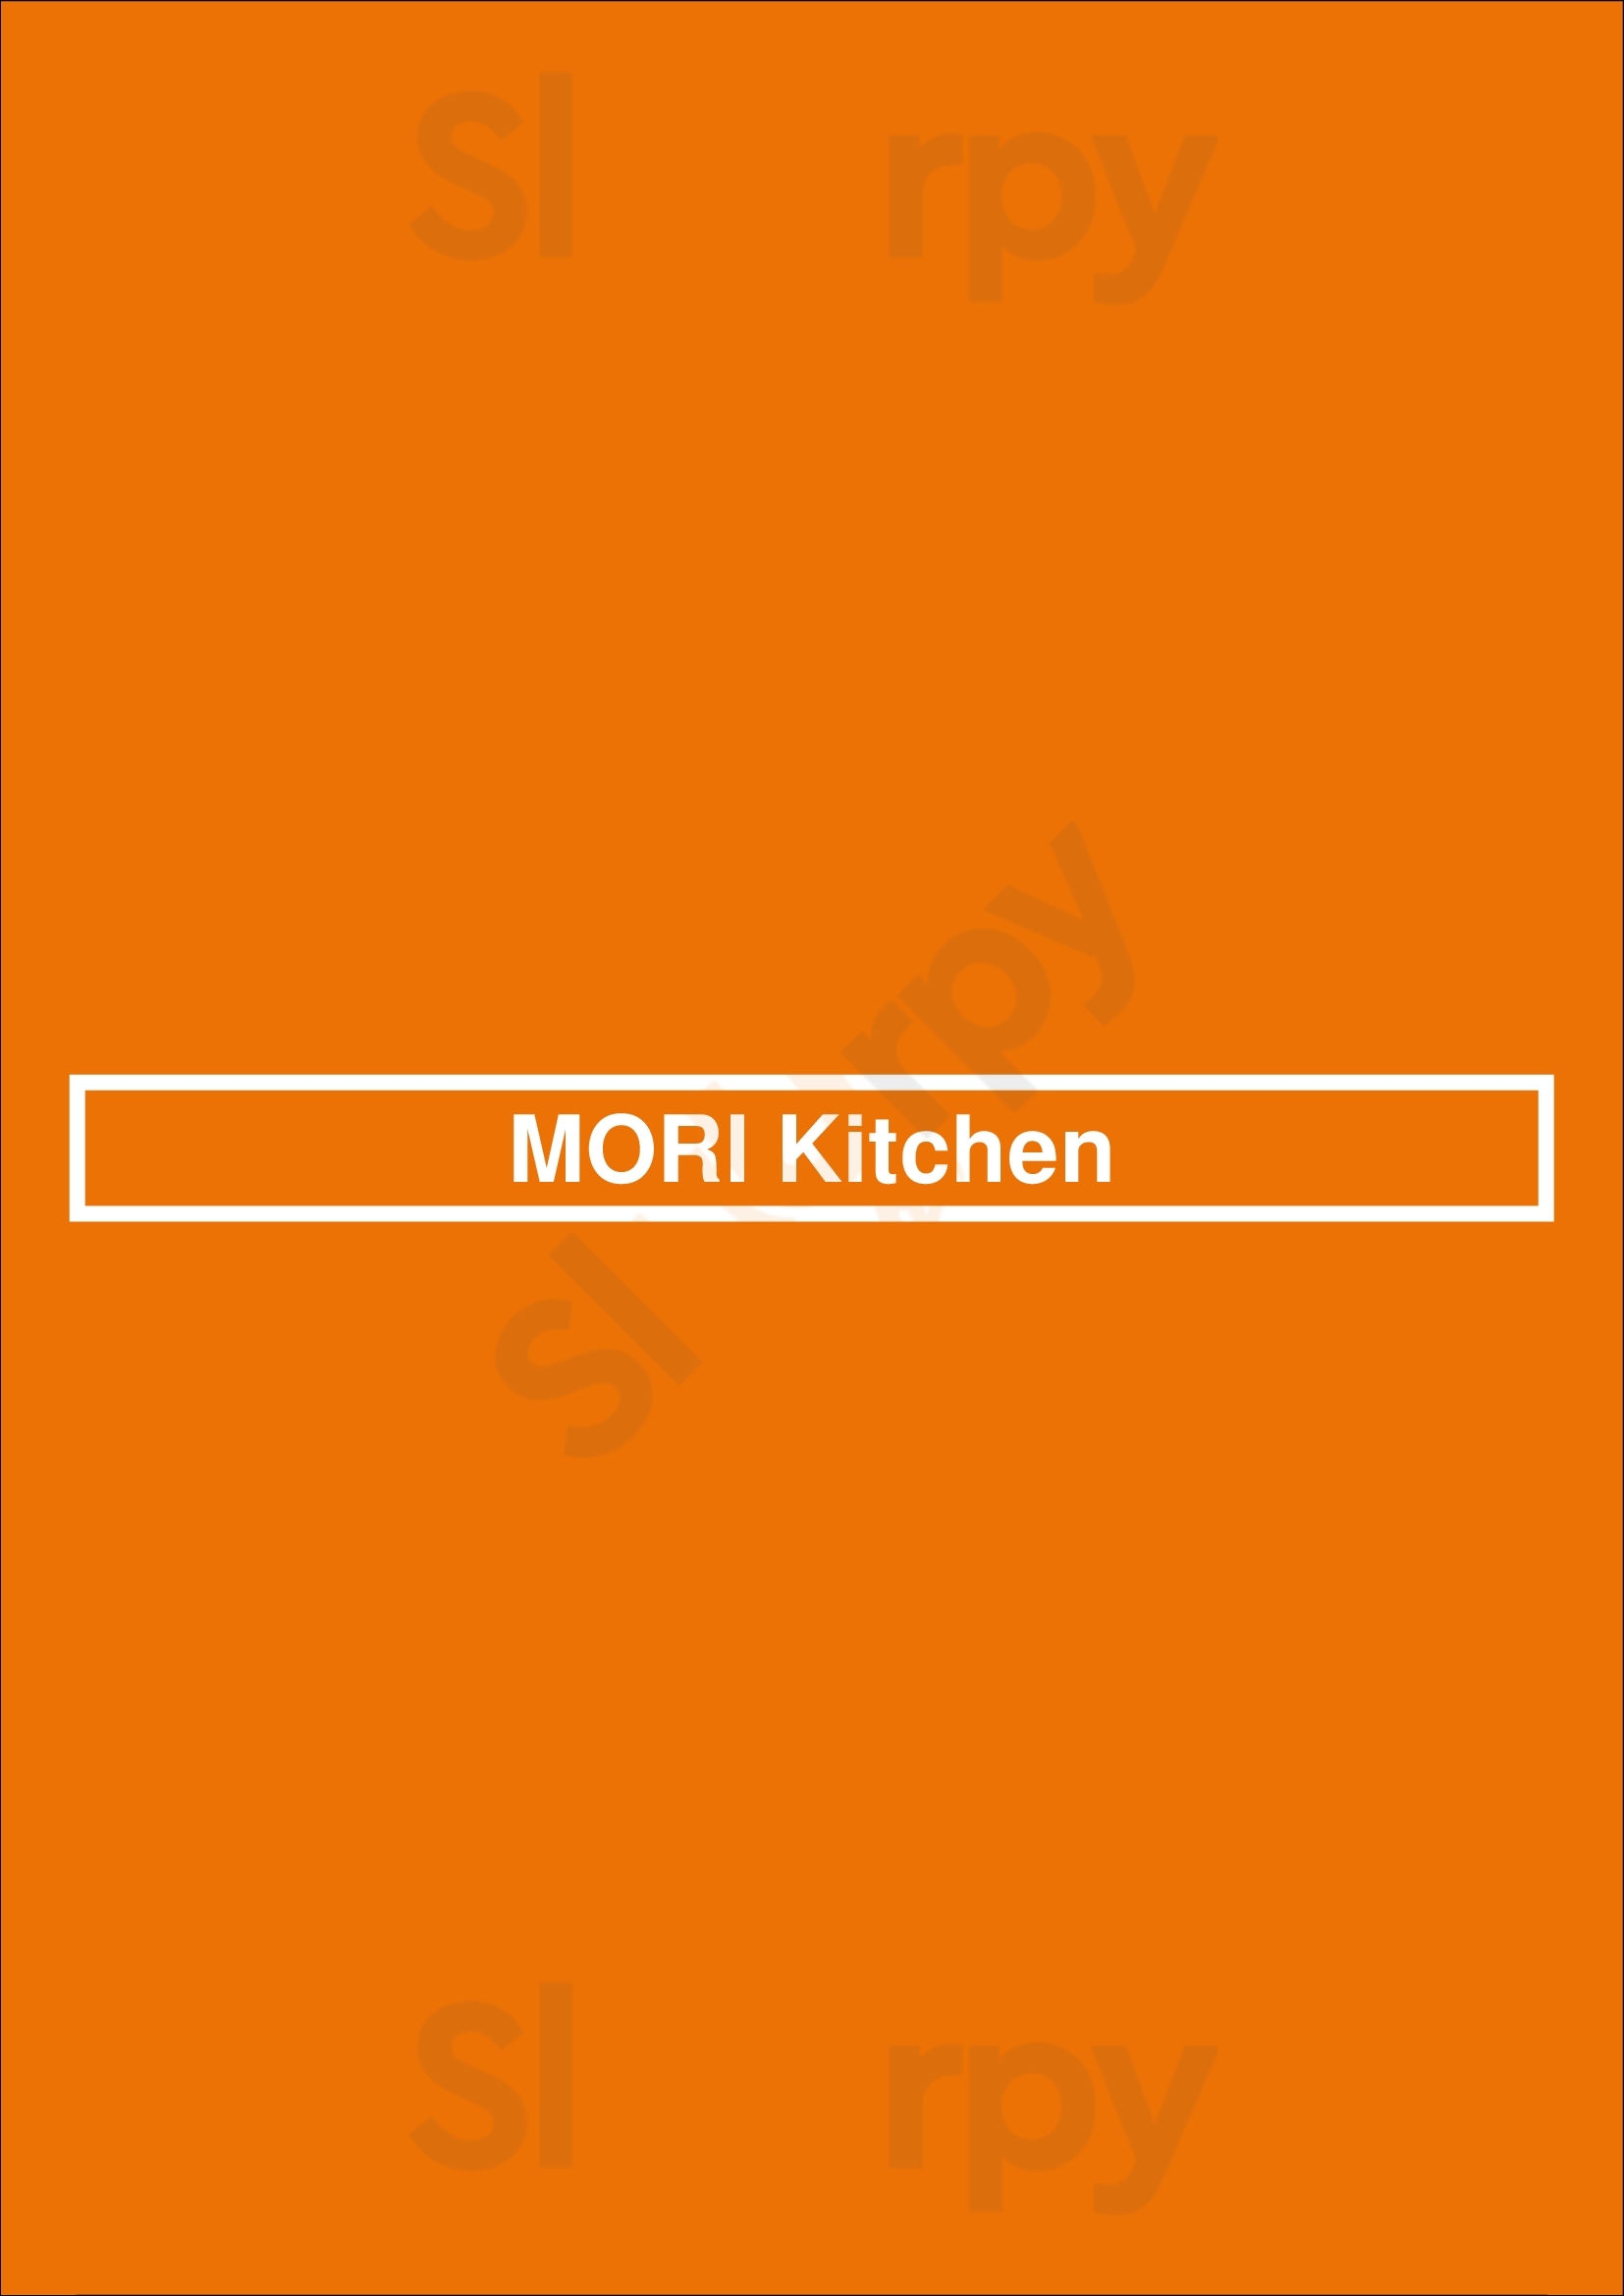 Mori Kitchen Almere Menu - 1